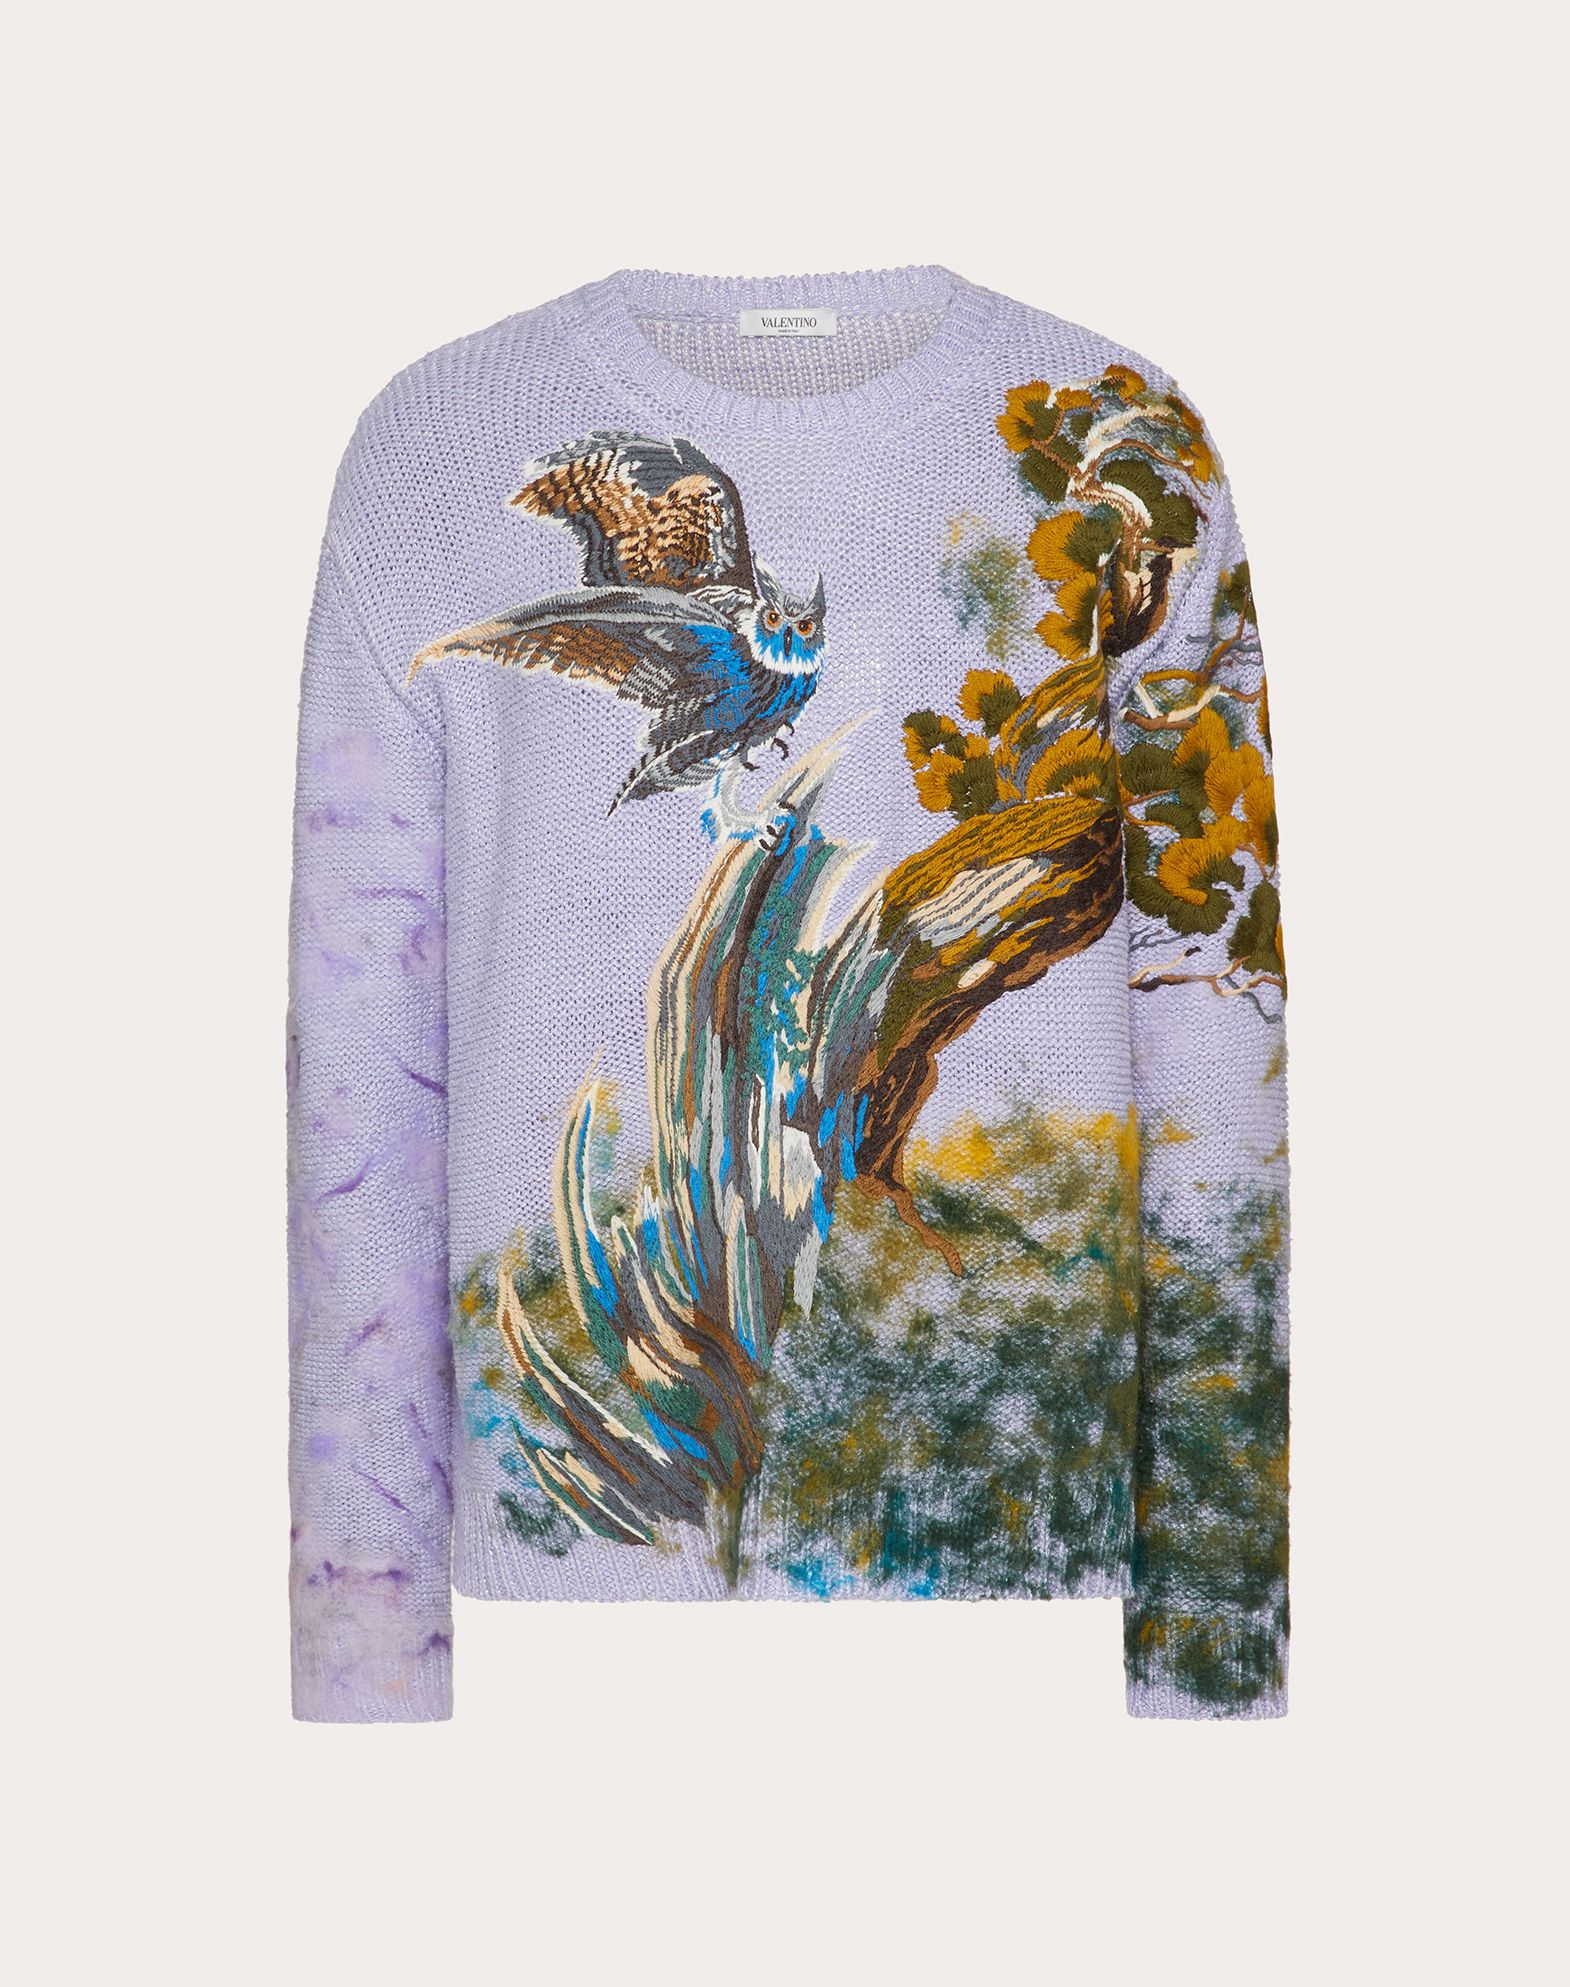 Valentino Uomo Blind Owl Silk Sweatshirt In Multicolored